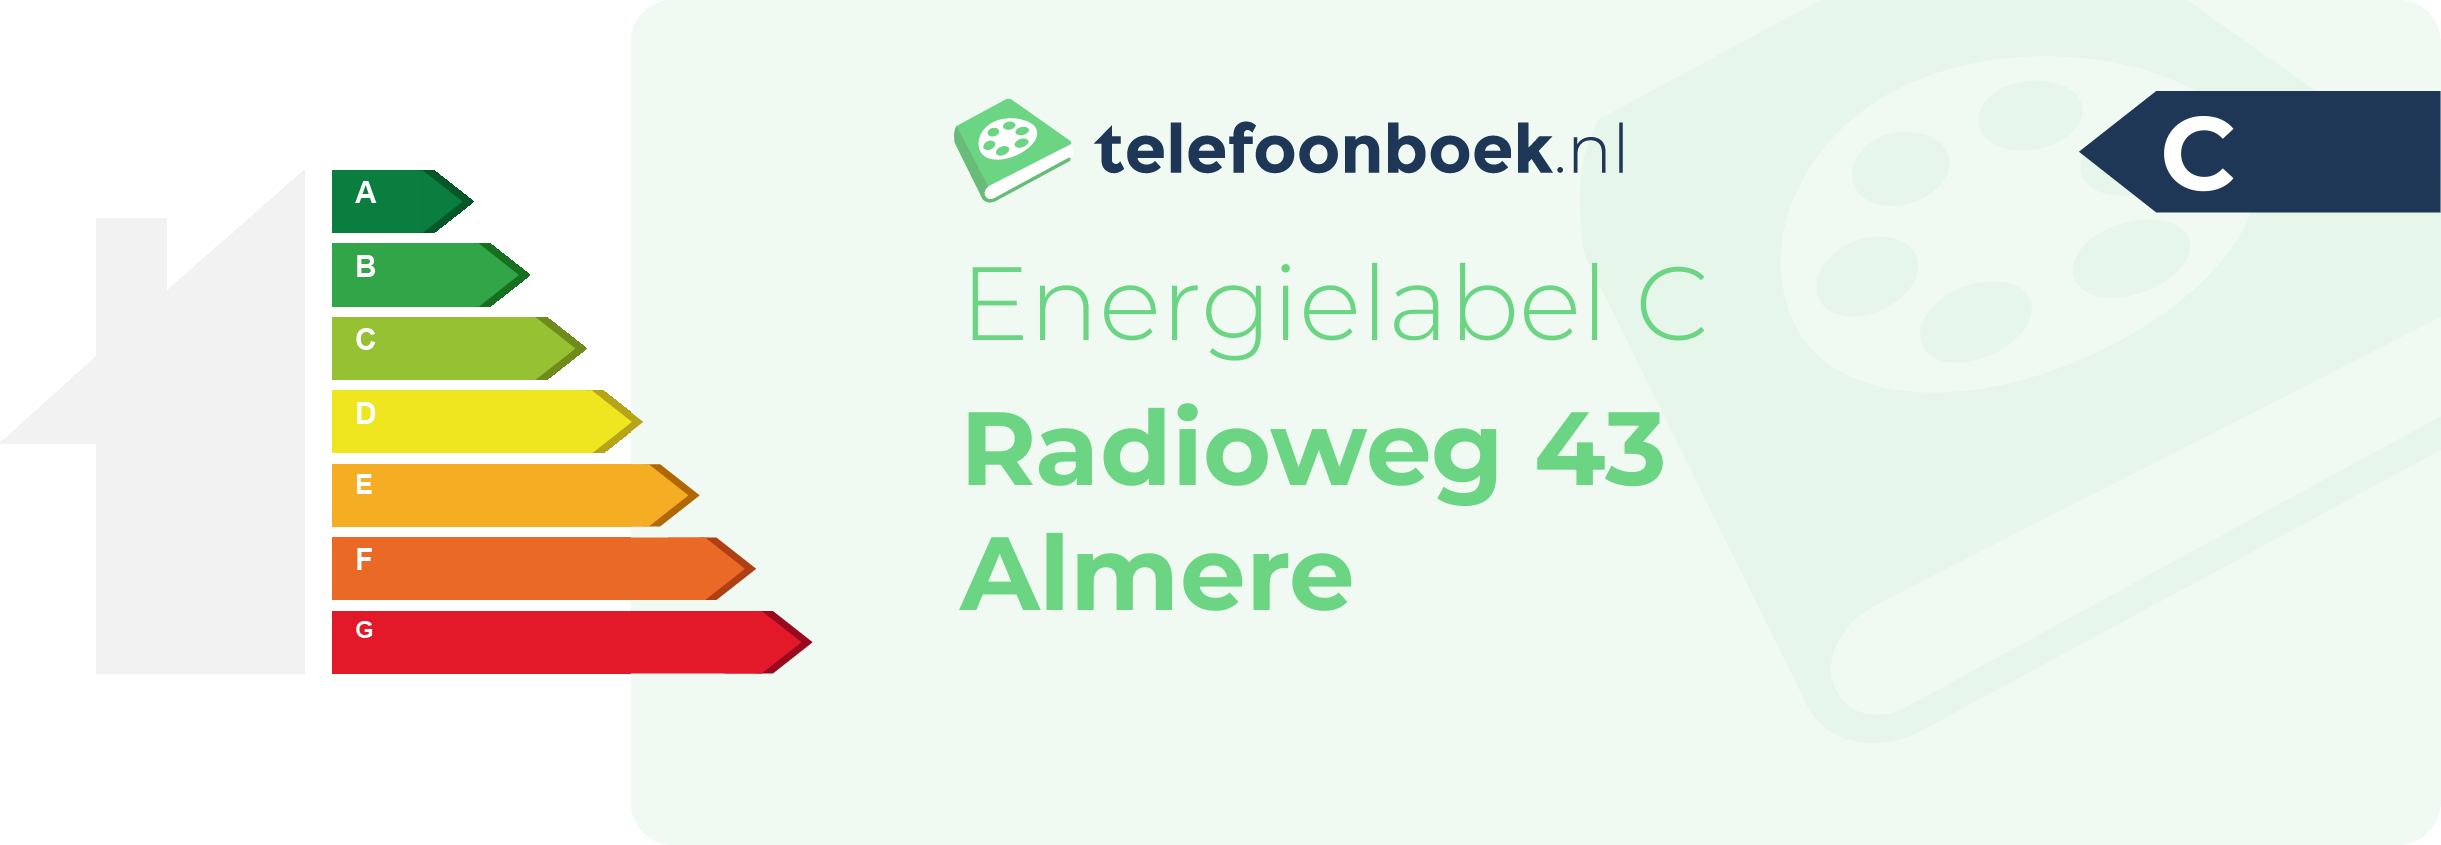 Energielabel Radioweg 43 Almere